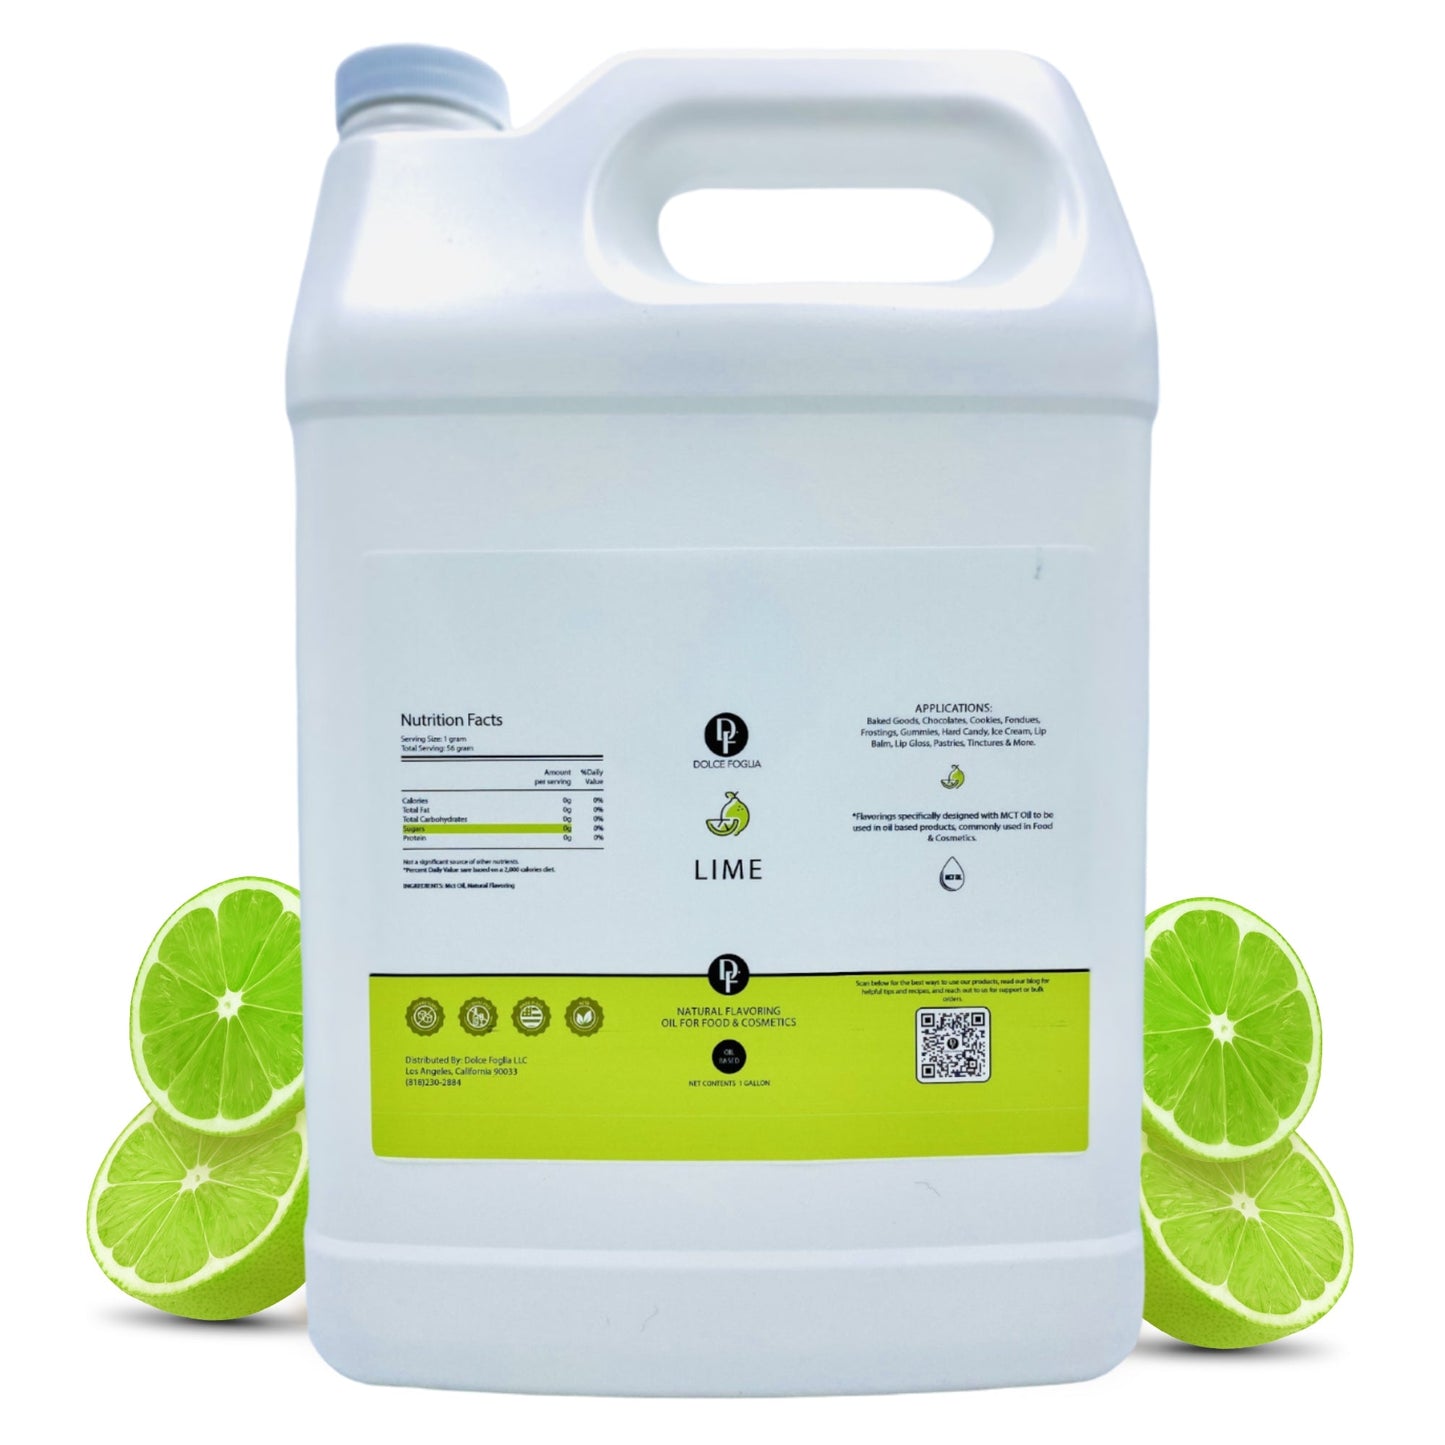 Lime Flavoring Oil - Dolcefogliaflavors